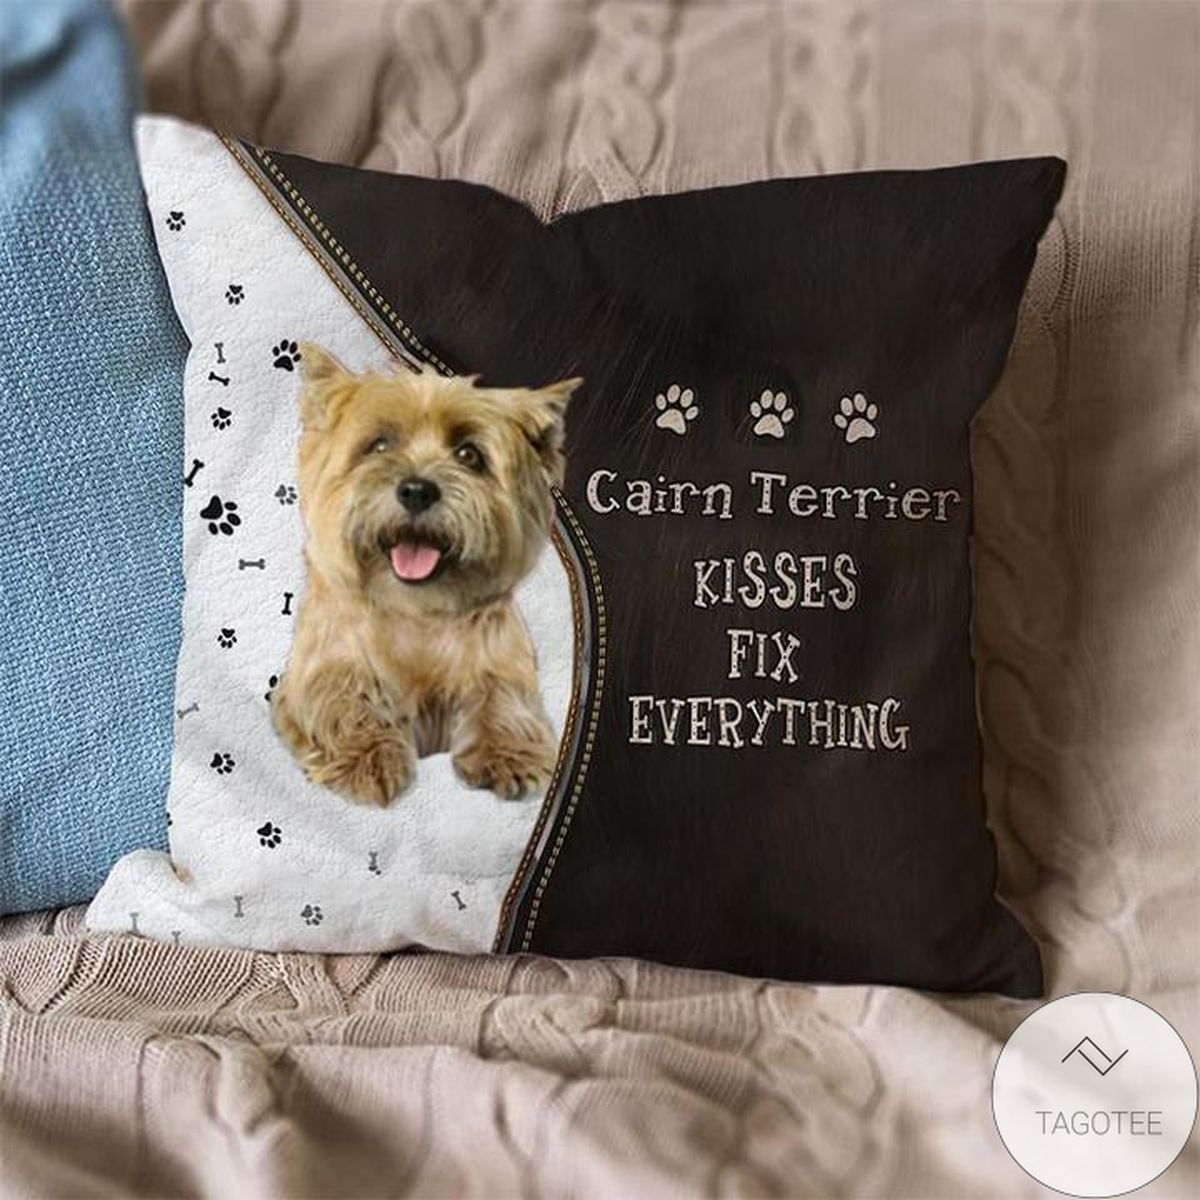 Cairn Terrier Kisses Fix Everything Pillowcase